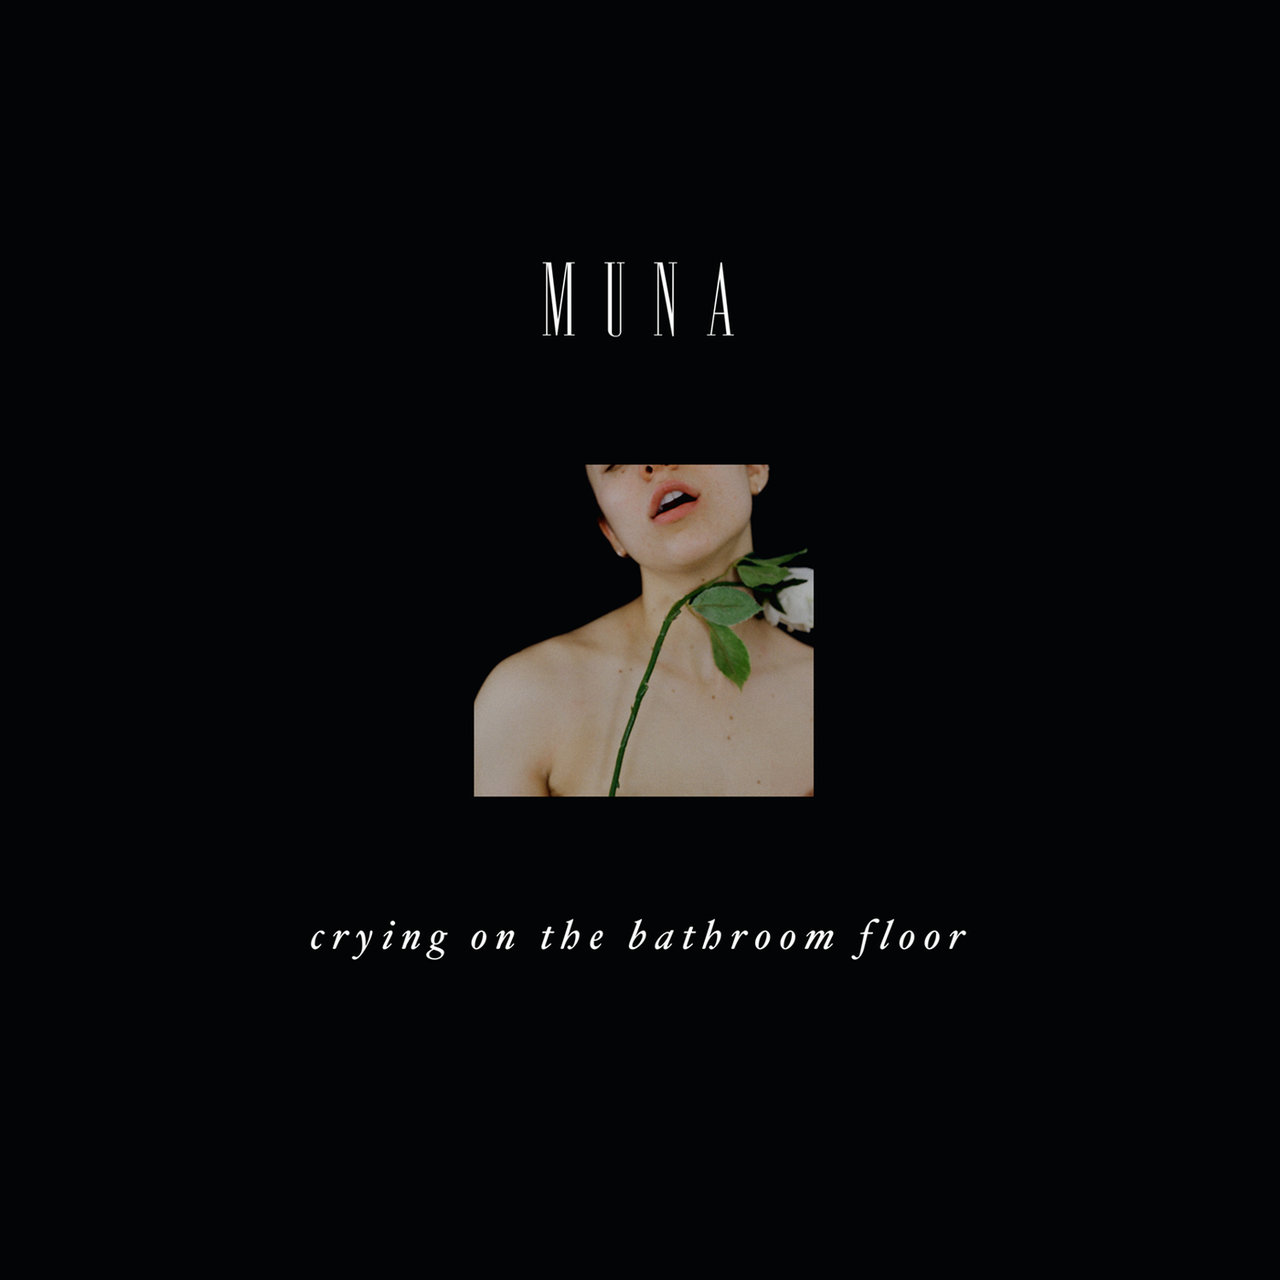 MUNA Drop Oscar-Worthy Lyric Video for “Crying on the Bathroom Floor”